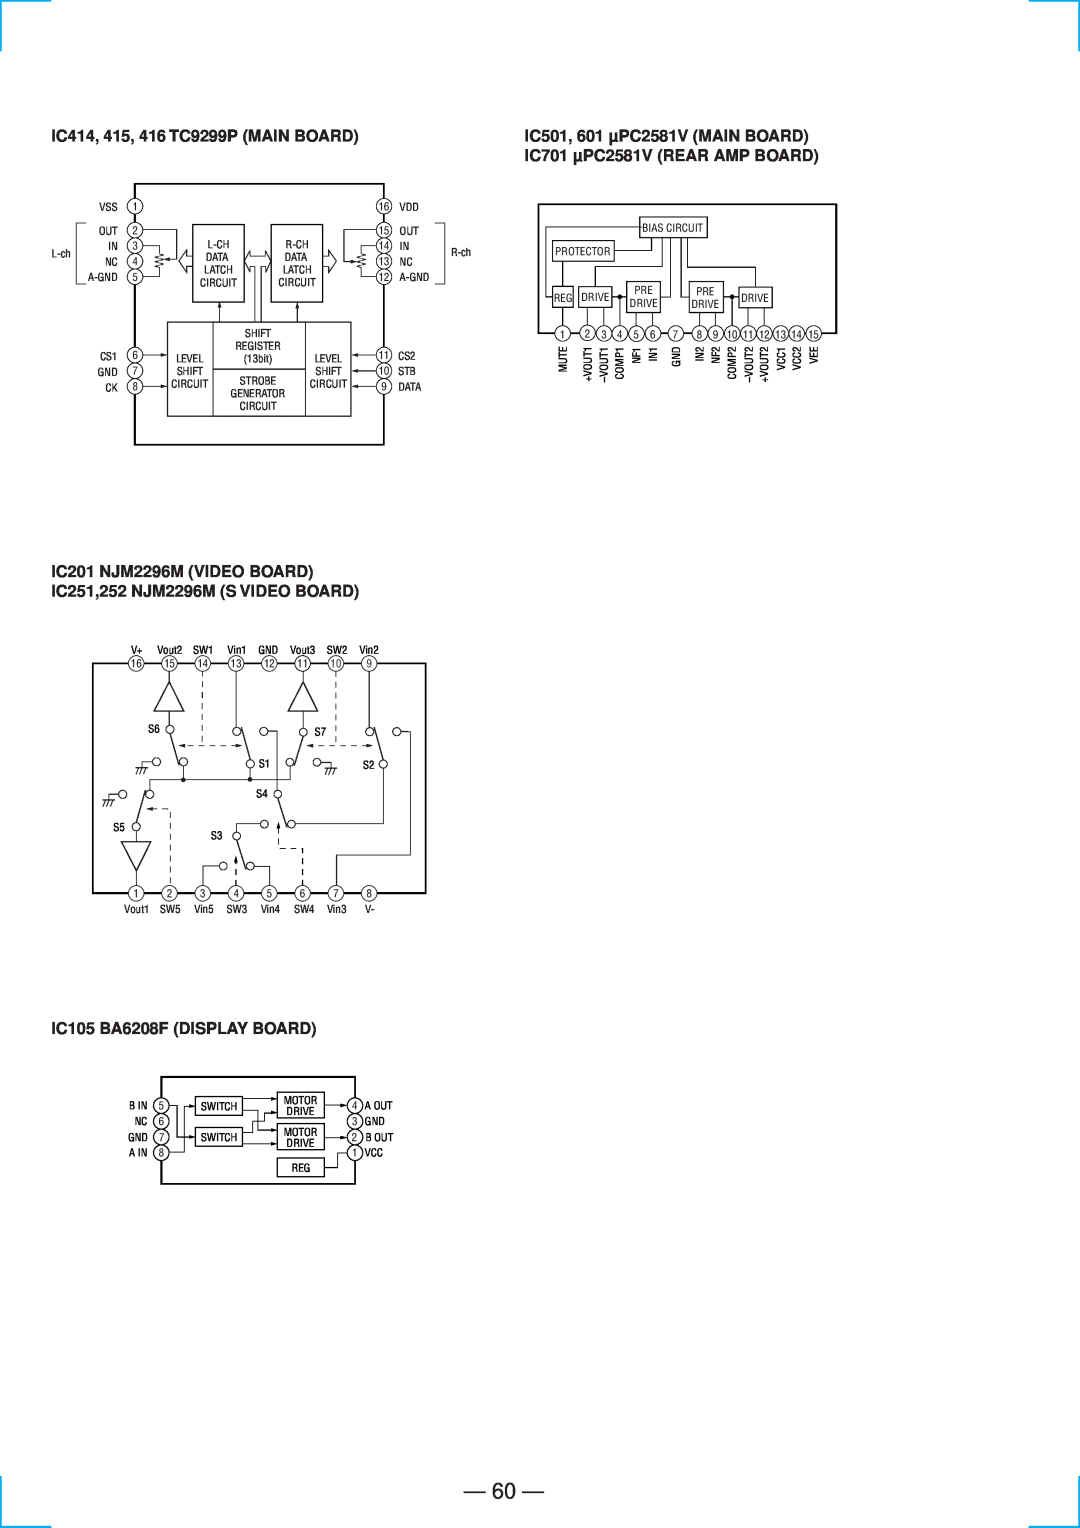 Sony STR-DE835 specifications 60, IC414, 415, 416 TC9299P MAIN BOARD, IC105 BA6208F DISPLAY BOARD 